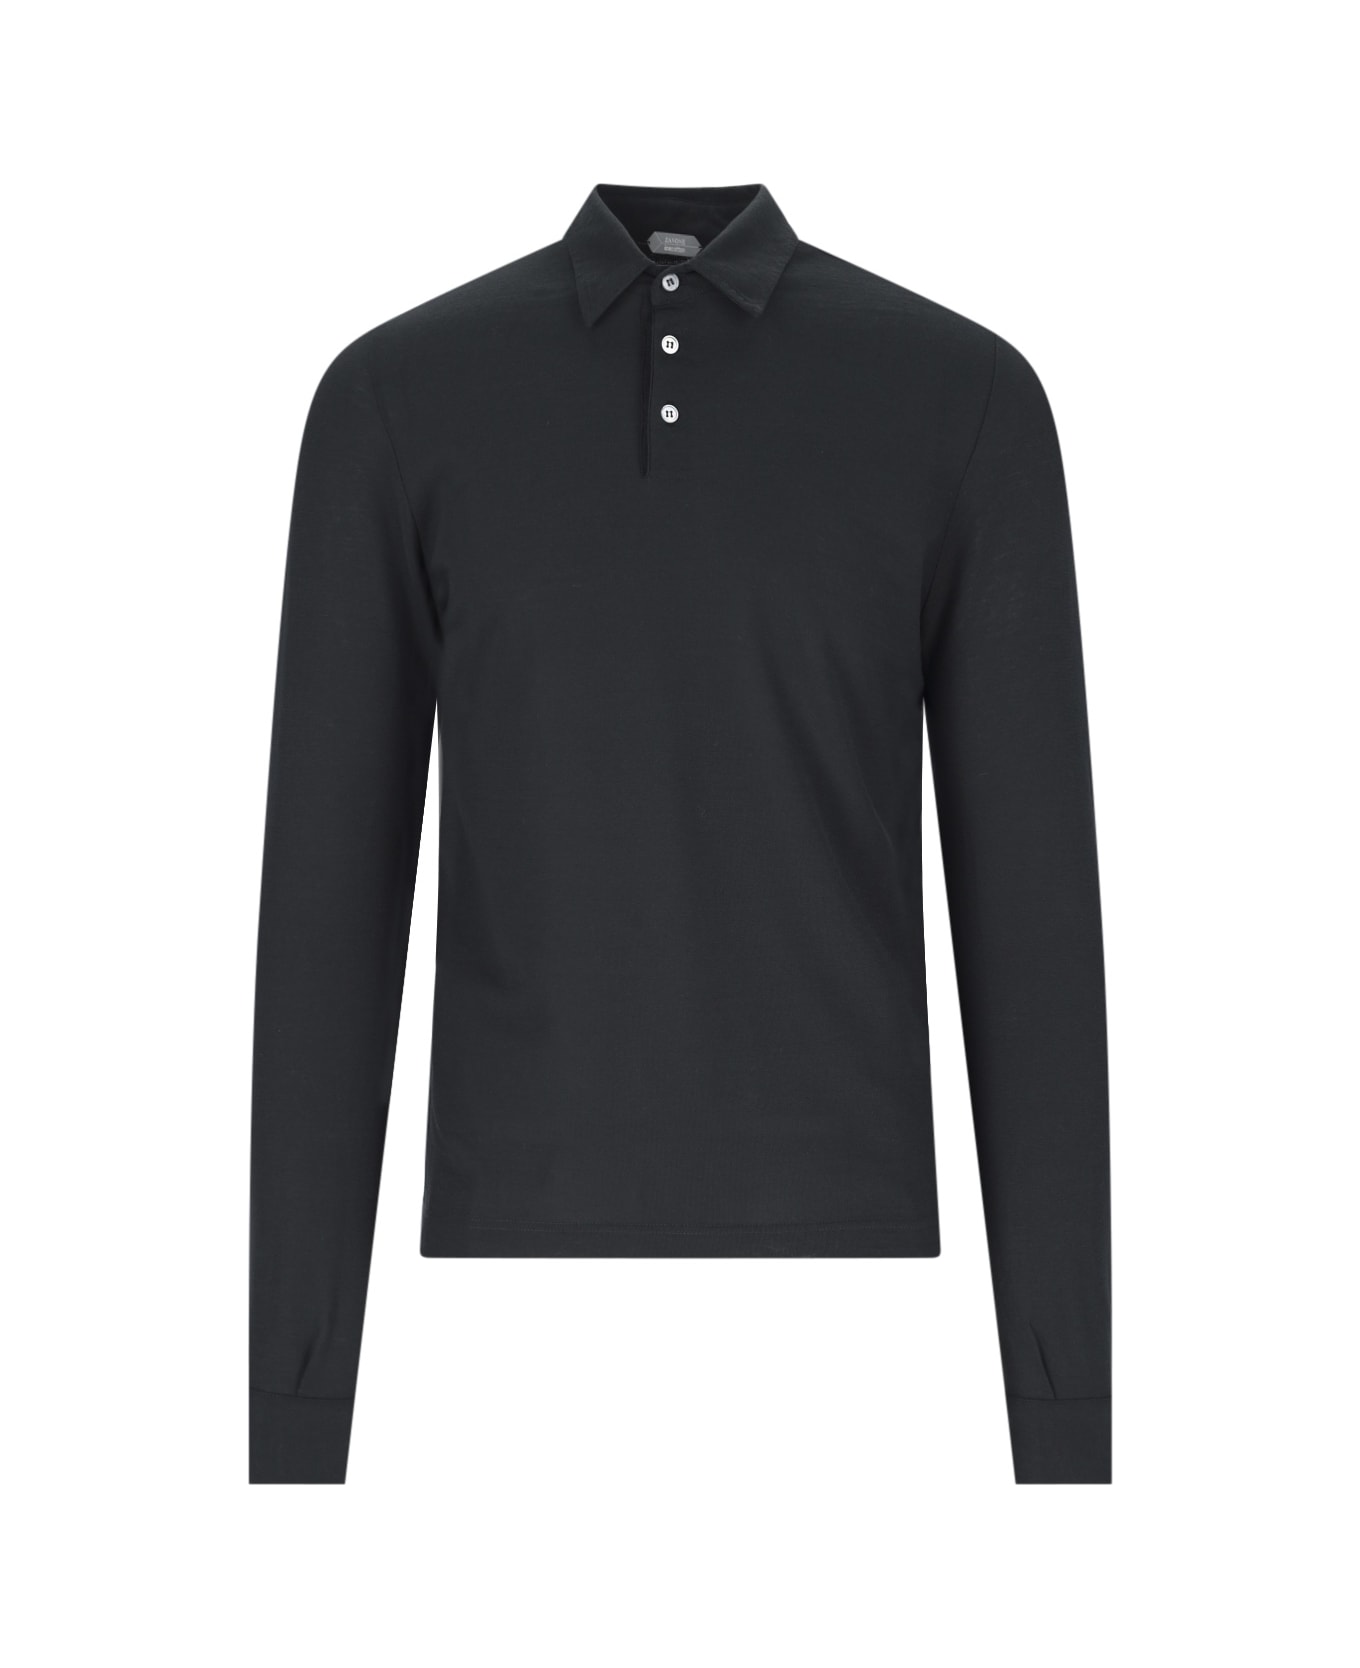 Zanone Polo Shirt - Black   ポロシャツ